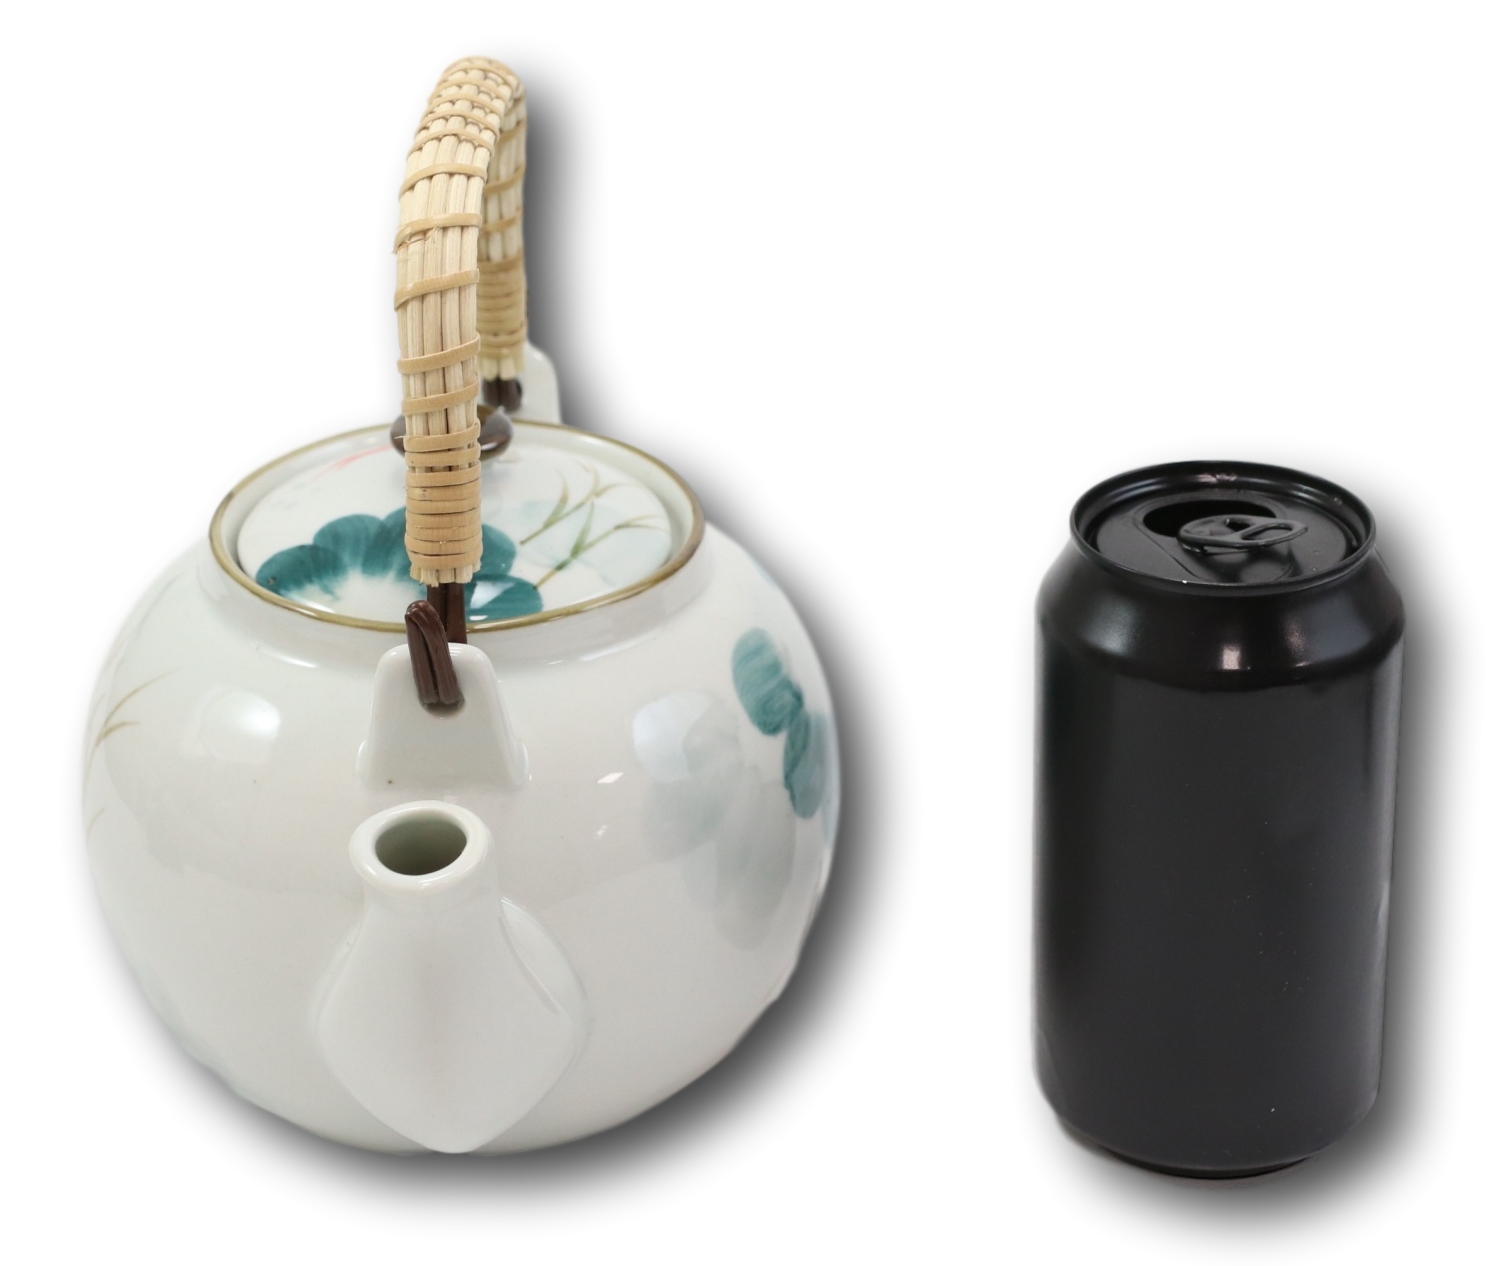 Feng Shui Yin Yang Koi Fish Pair In Lily Pond Ceramic Tea Pot 38oz Teapot Decor - image 4 of 4